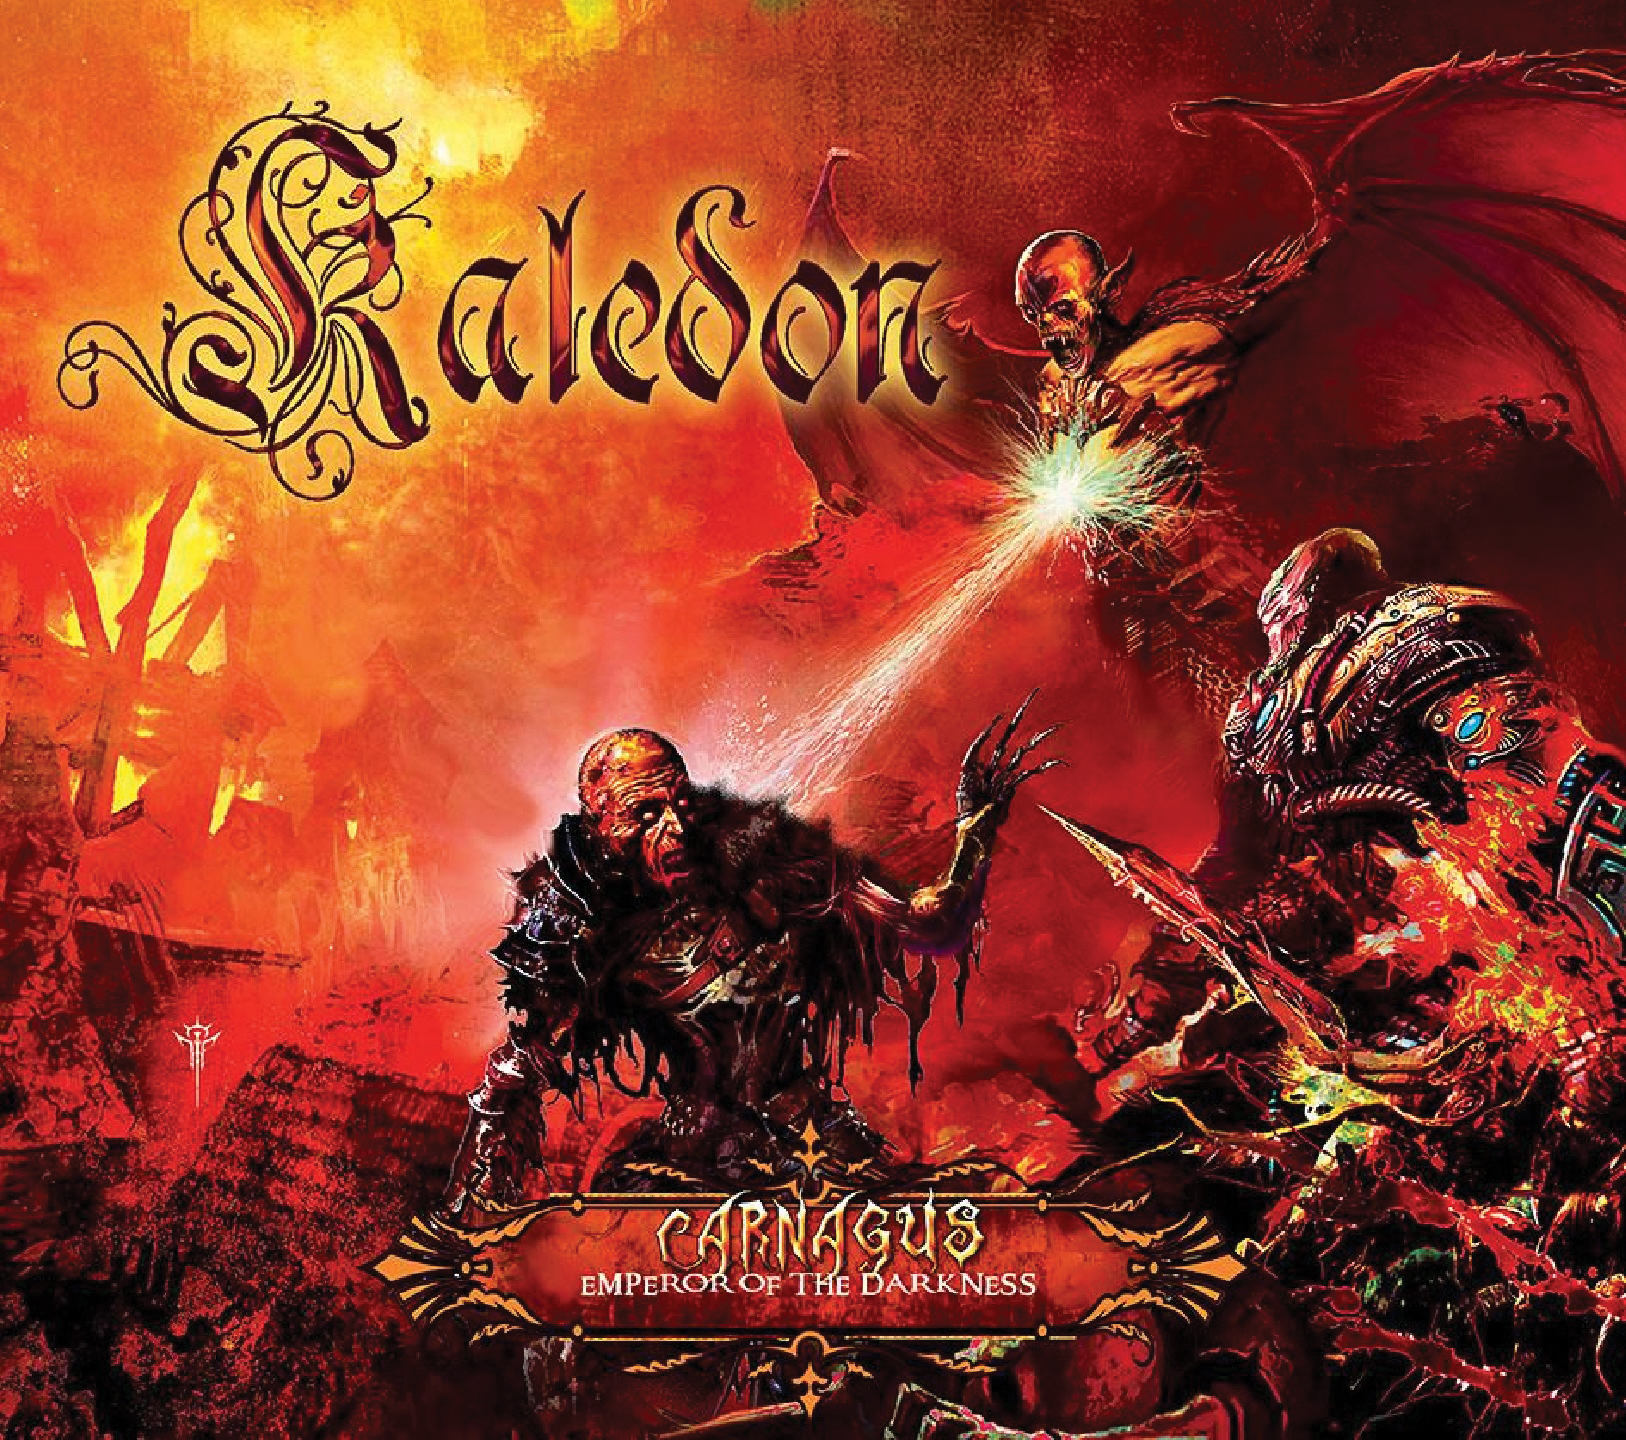 Kaledon - Carnagus: Emperor of the Darkness